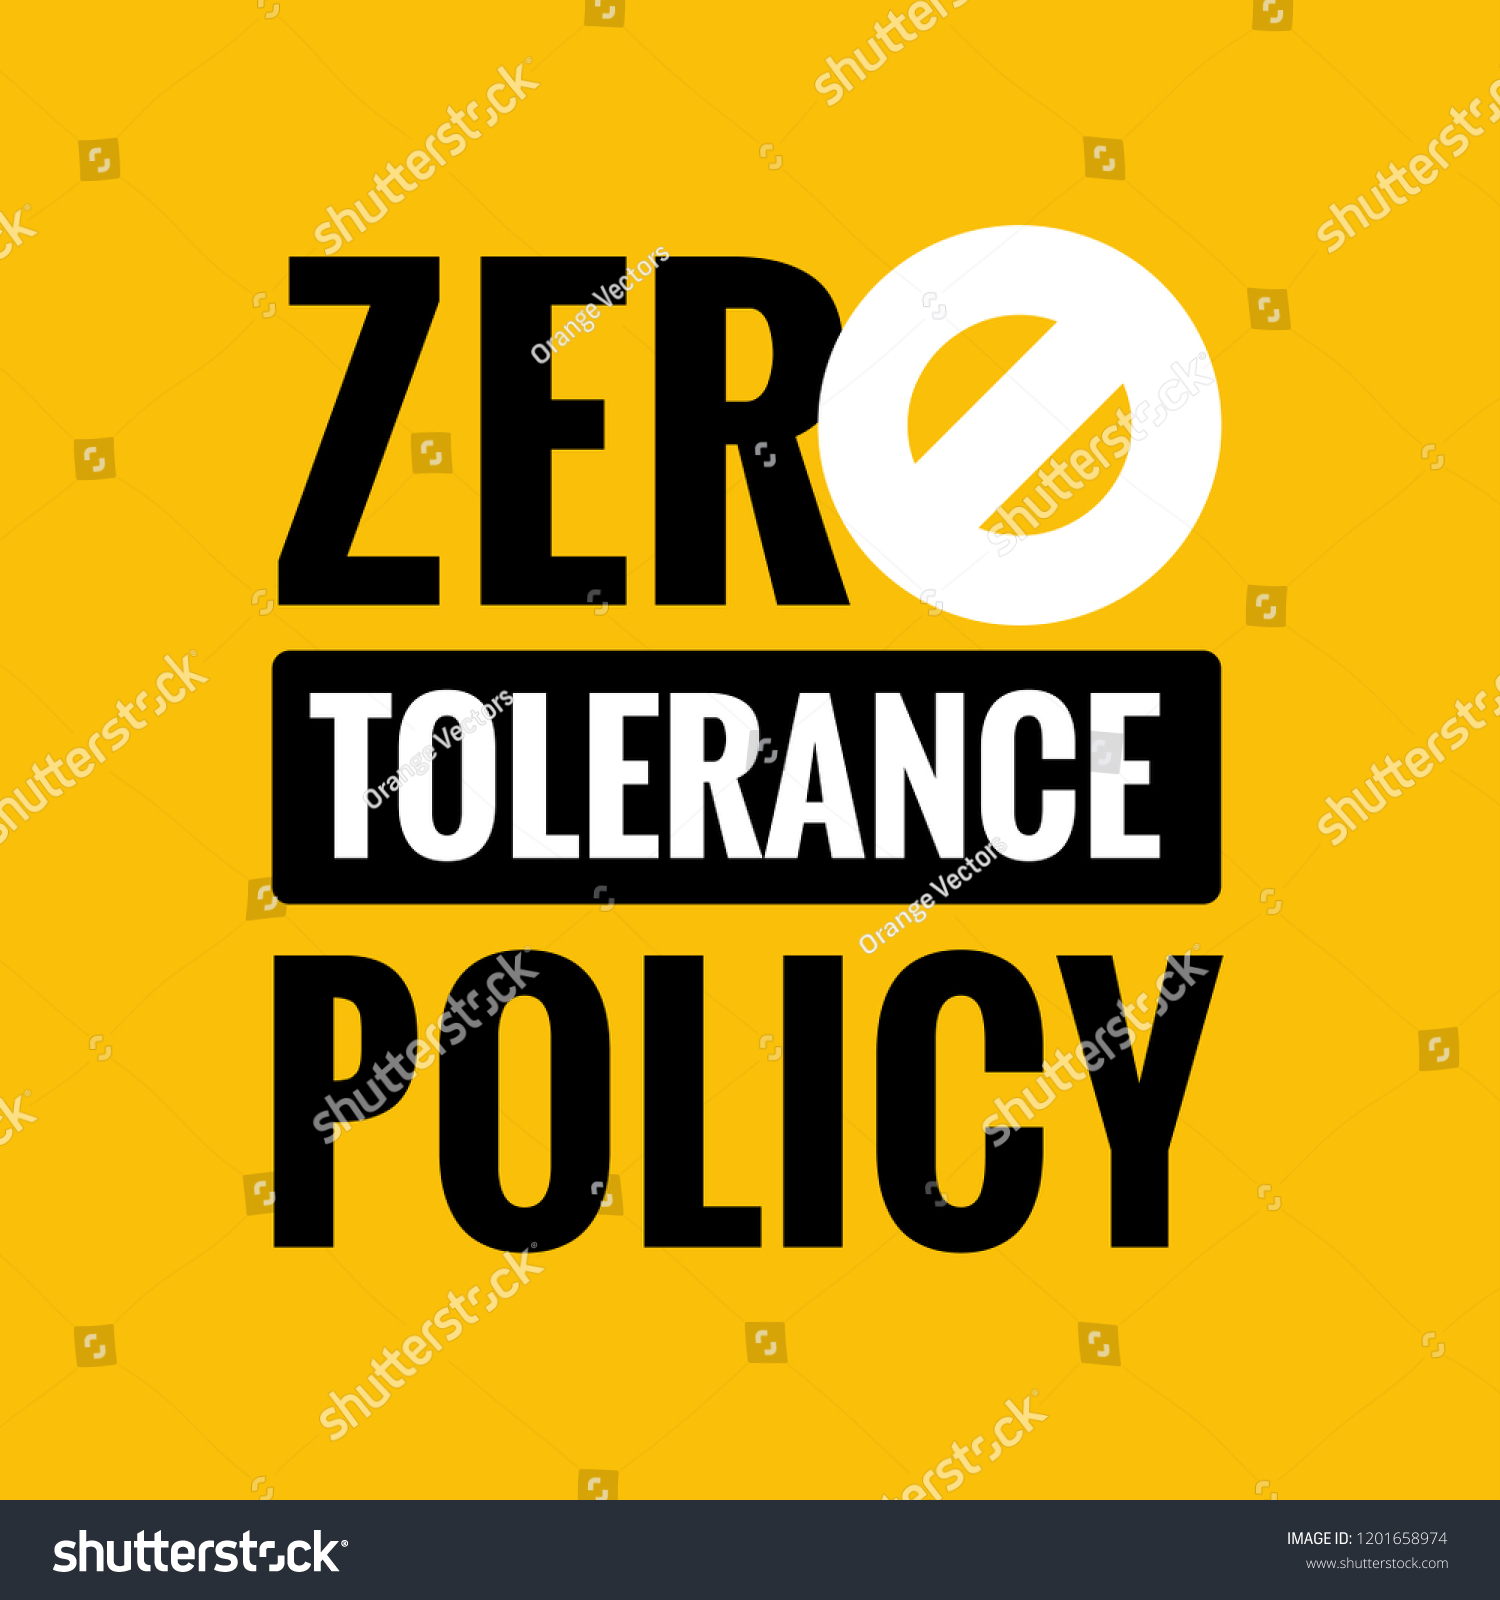 Zero Tolerance Policy Sign Royalty Free Stock Vector 1201658974 5661